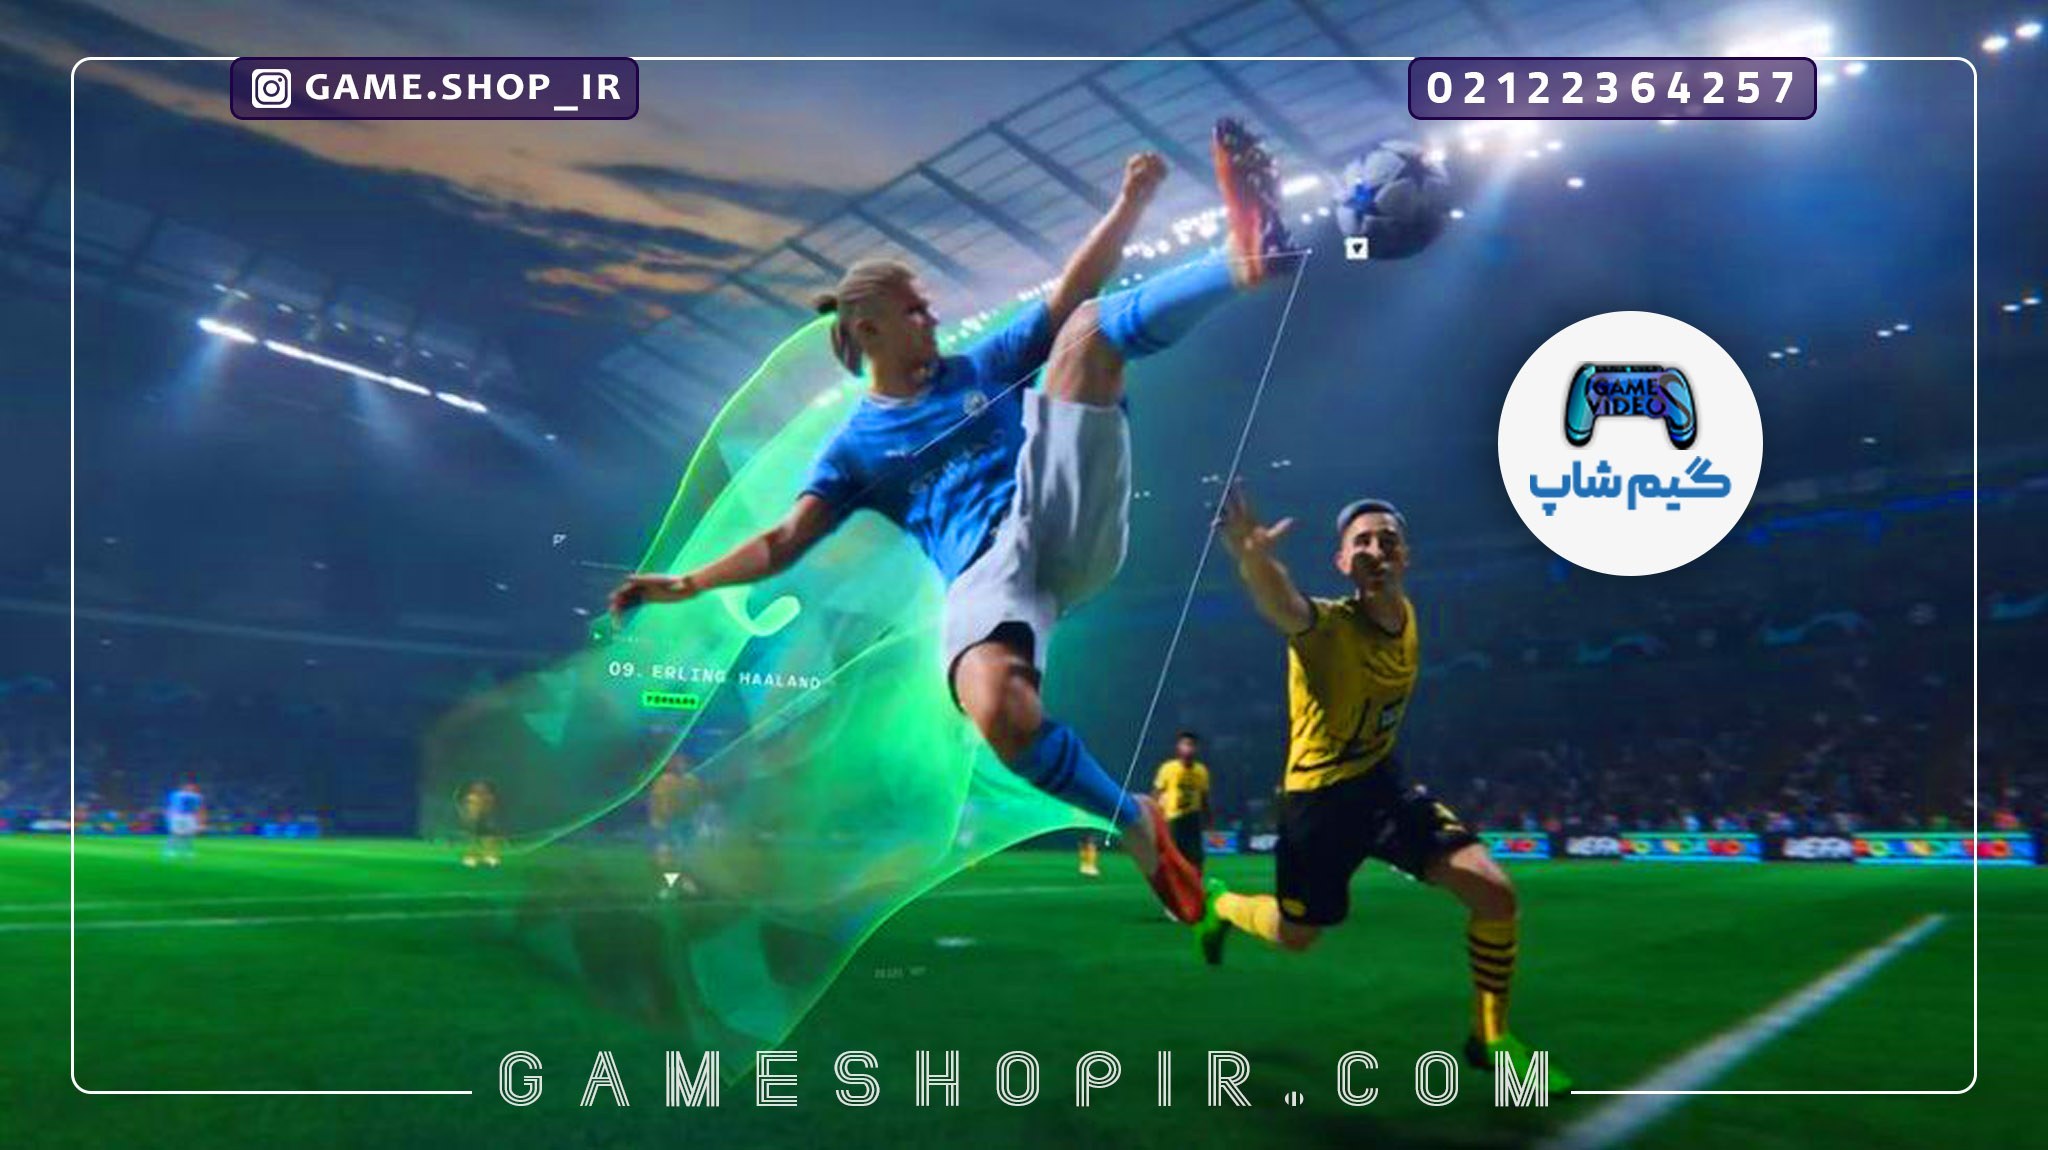 Jogo EA Sports FC 24 - PS5 - ShopB - 14 anos!